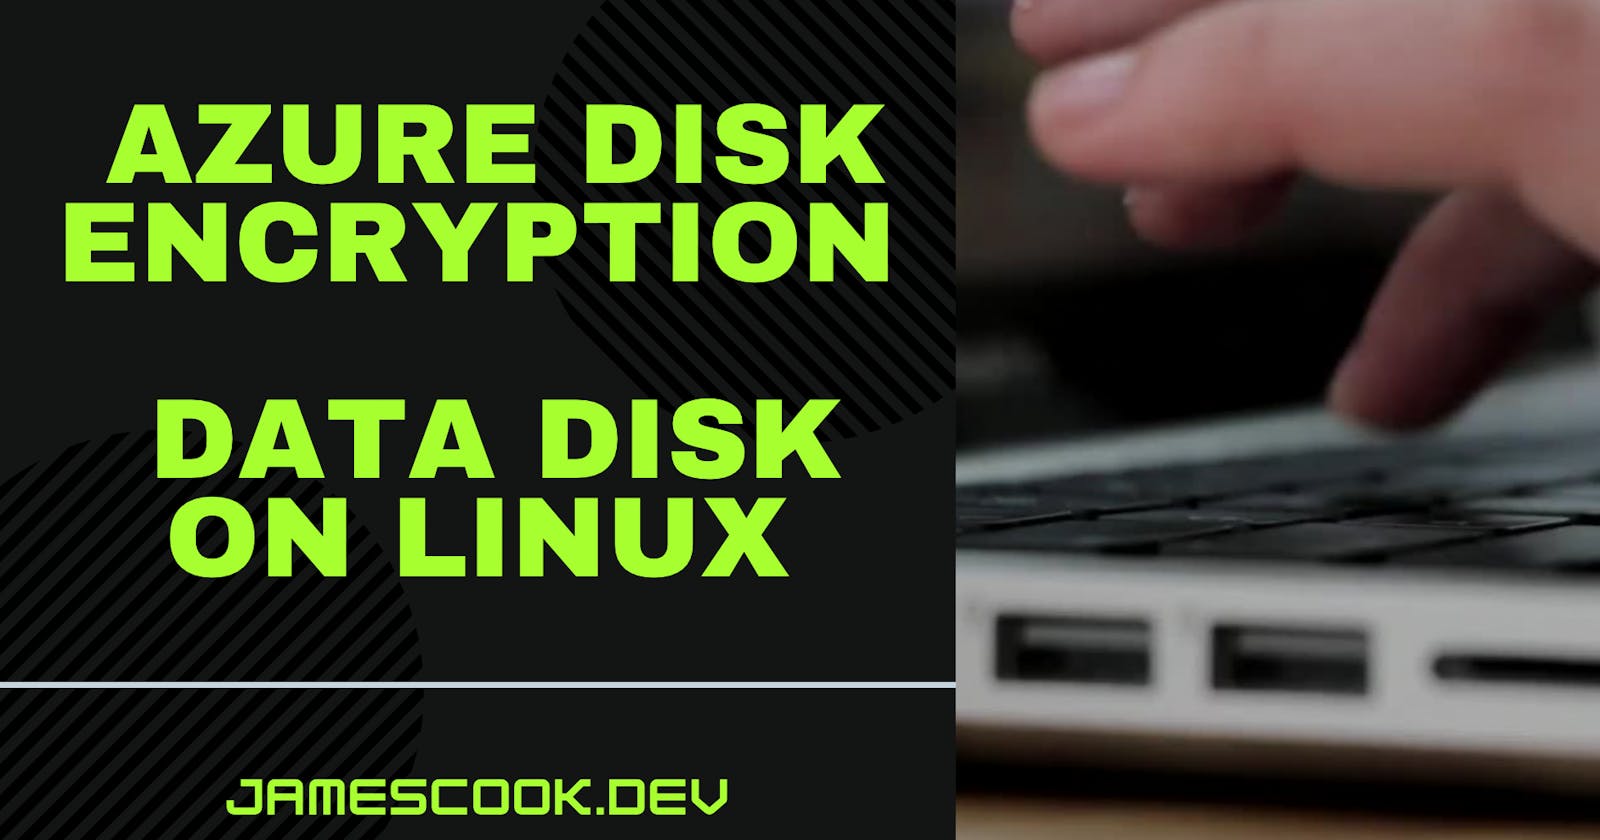 Azure Disk Encryption for Data Disk on Linux